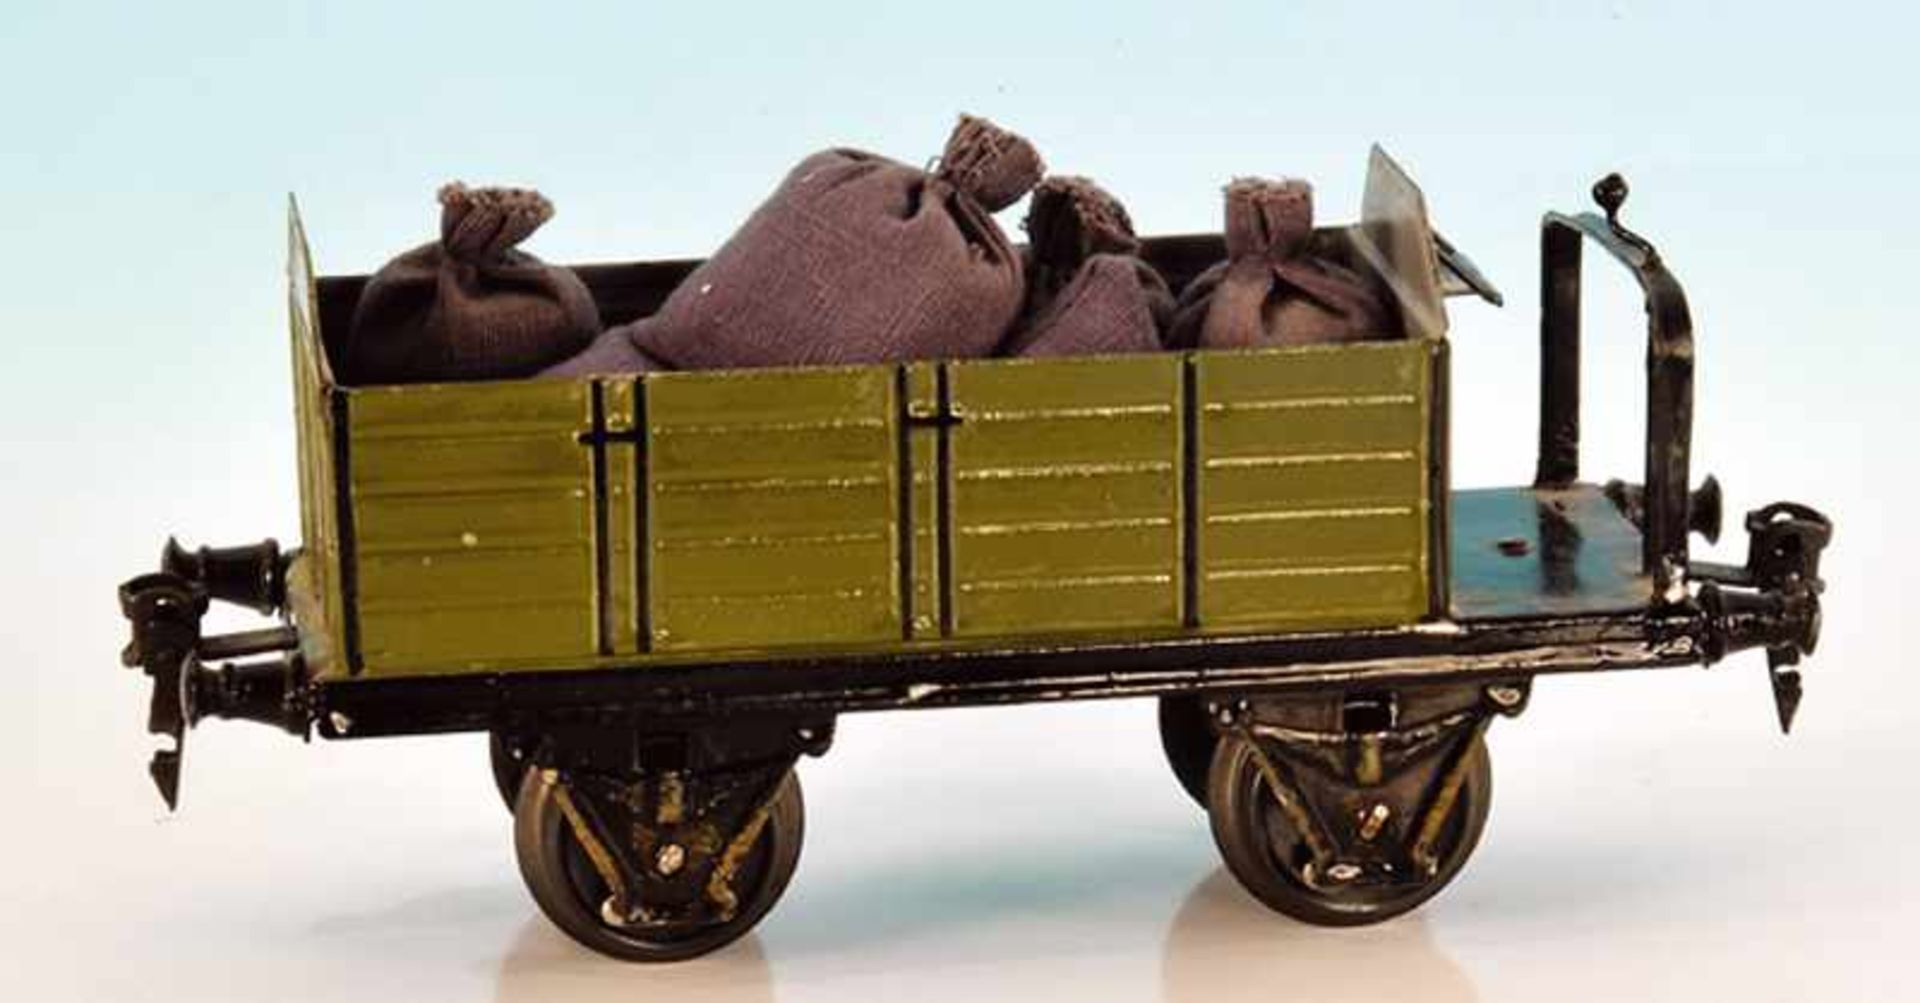 MÄRKLIN Hochbordwagen 1918/1 20 cm, Blech, grün handlackiert, mit 7 Säcken beladen, deutliche